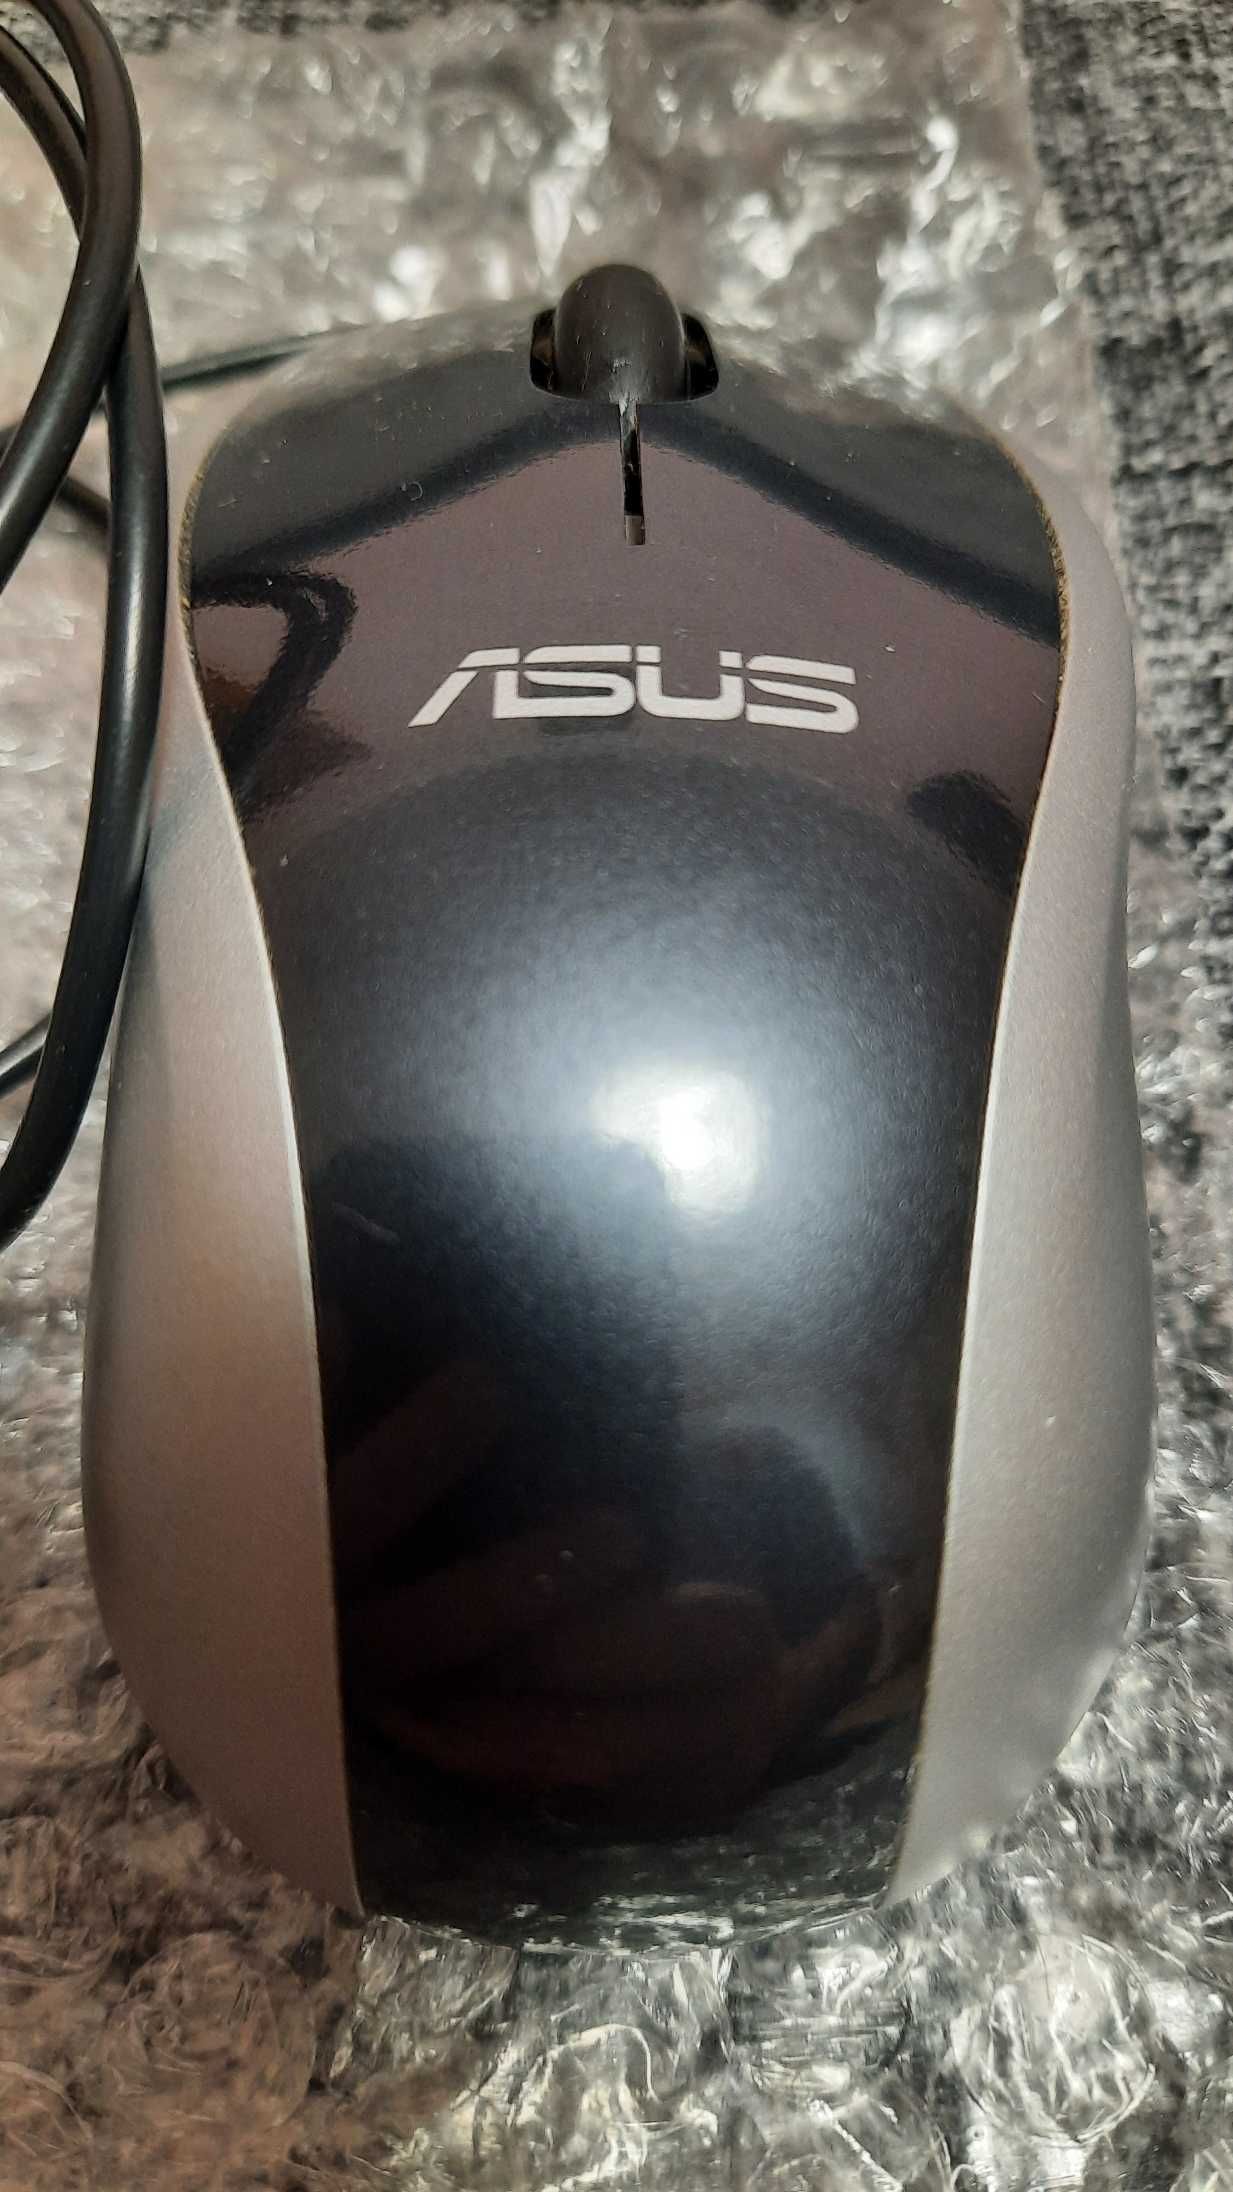 Мышка Asus M-UAG120 Optical Mouse (Logitech) USB